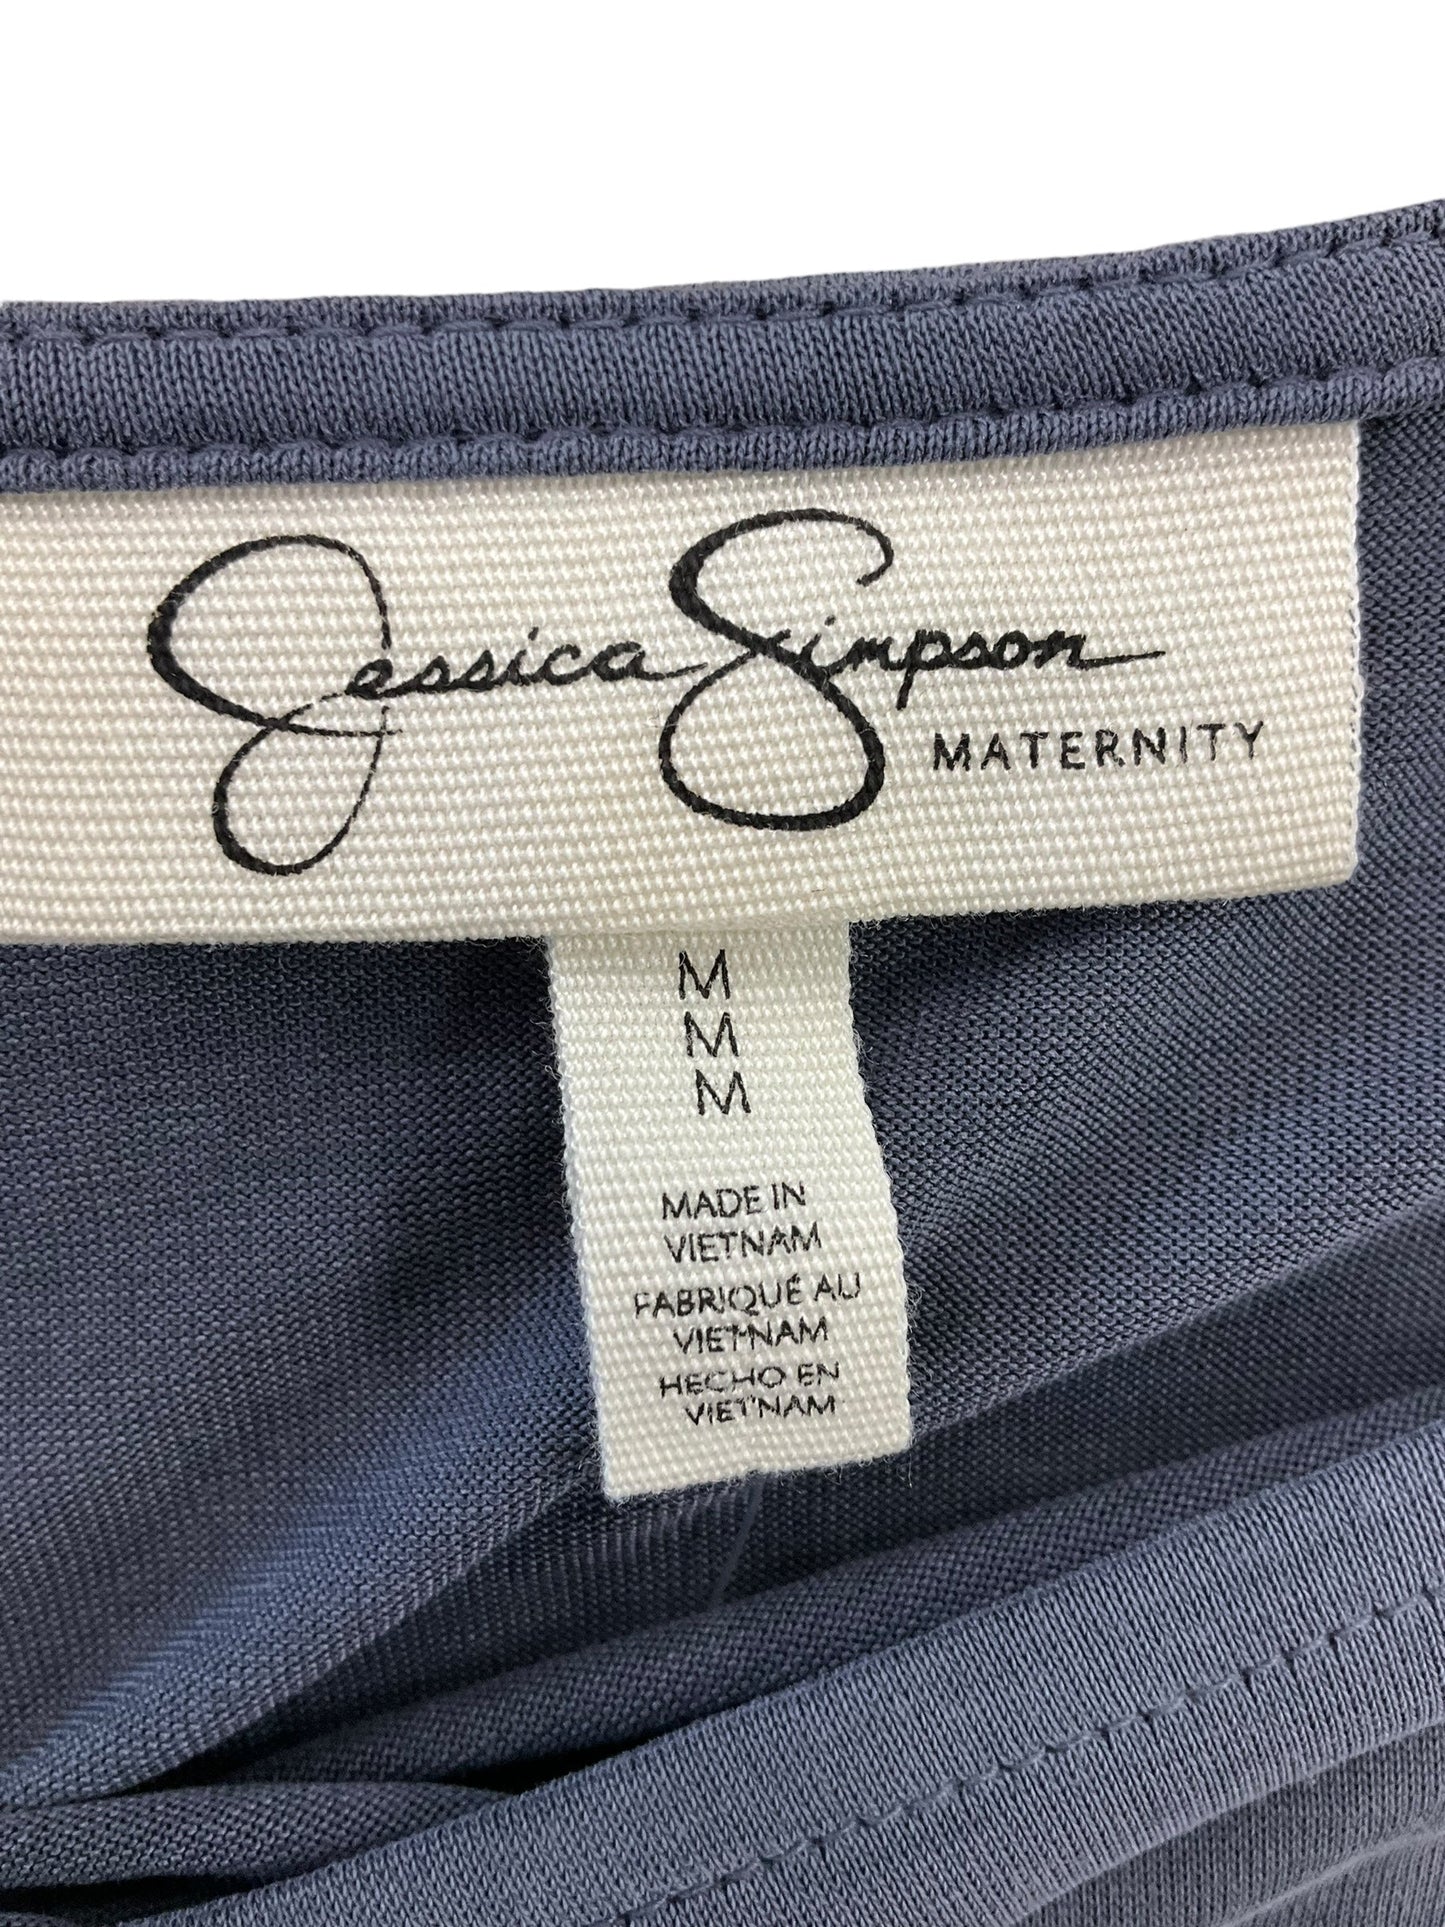 Grey Maternity Top Long Sleeve Jessica Simpson Maternity, Size M